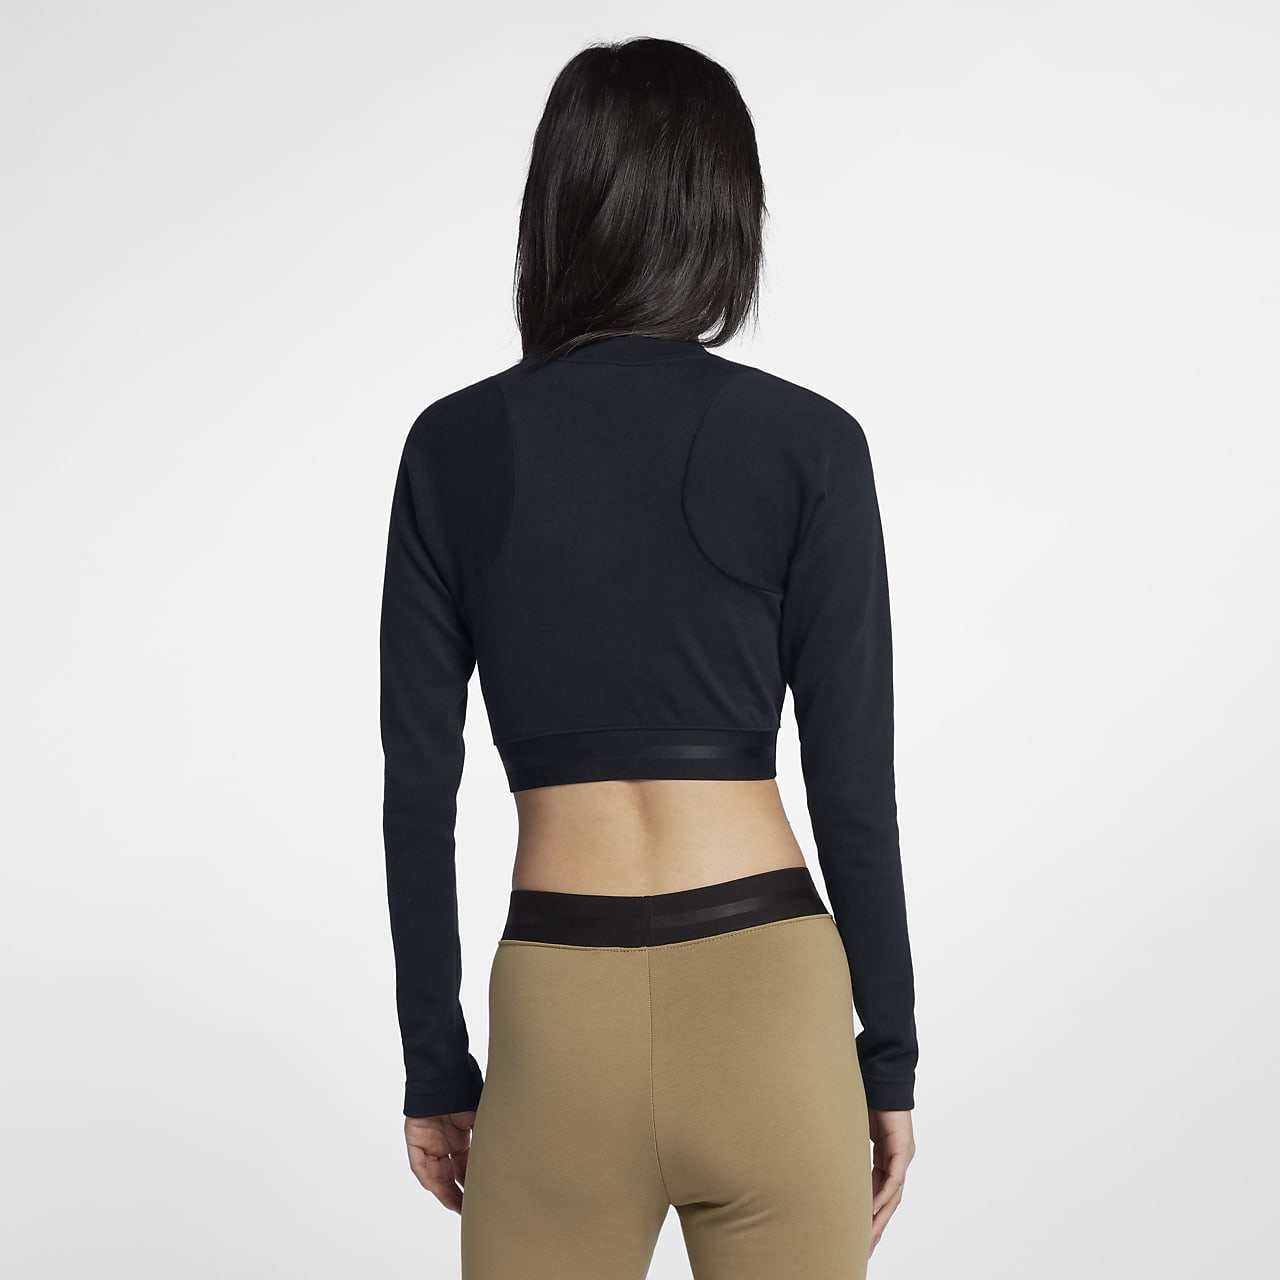 Nike Womens Sportswear Crop Top Shine T-Shirt BV5015-010 Black Gold-Size  Medium